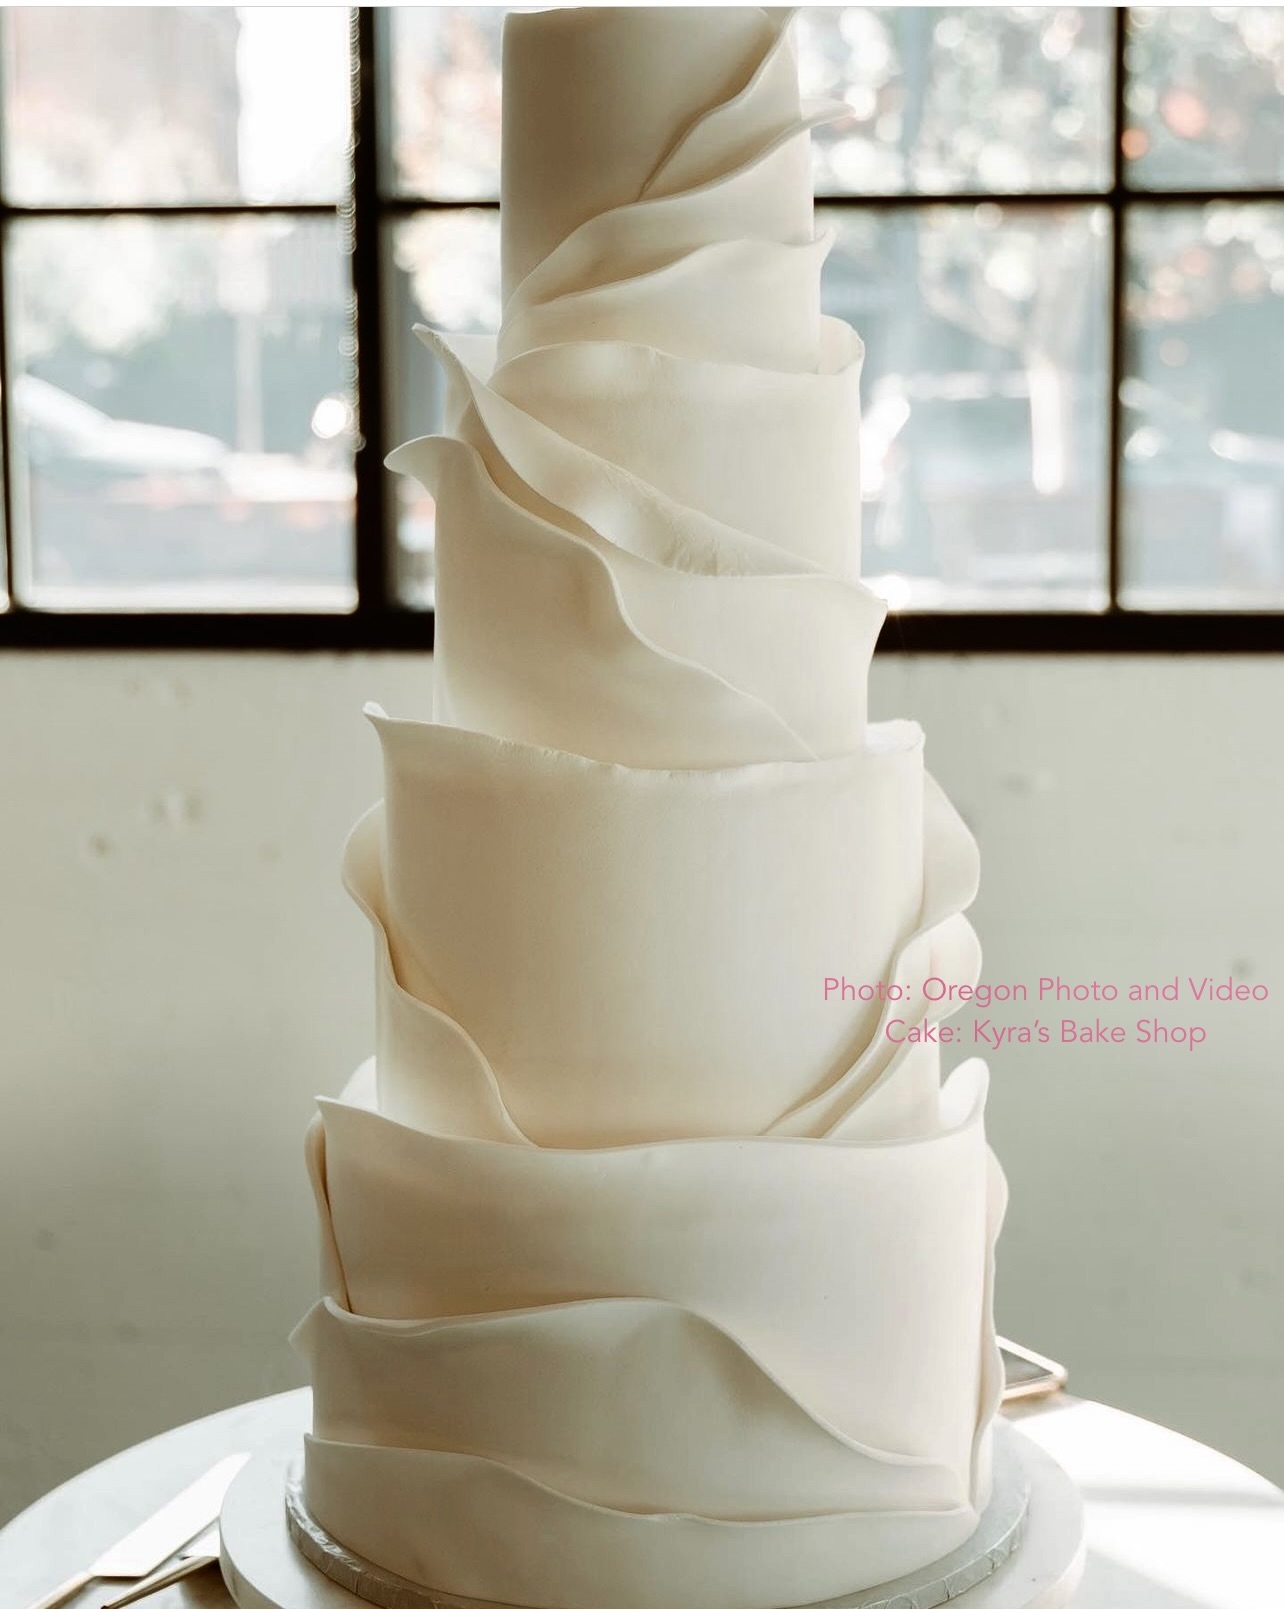 Share 66+ 7 tier wedding cake latest - awesomeenglish.edu.vn